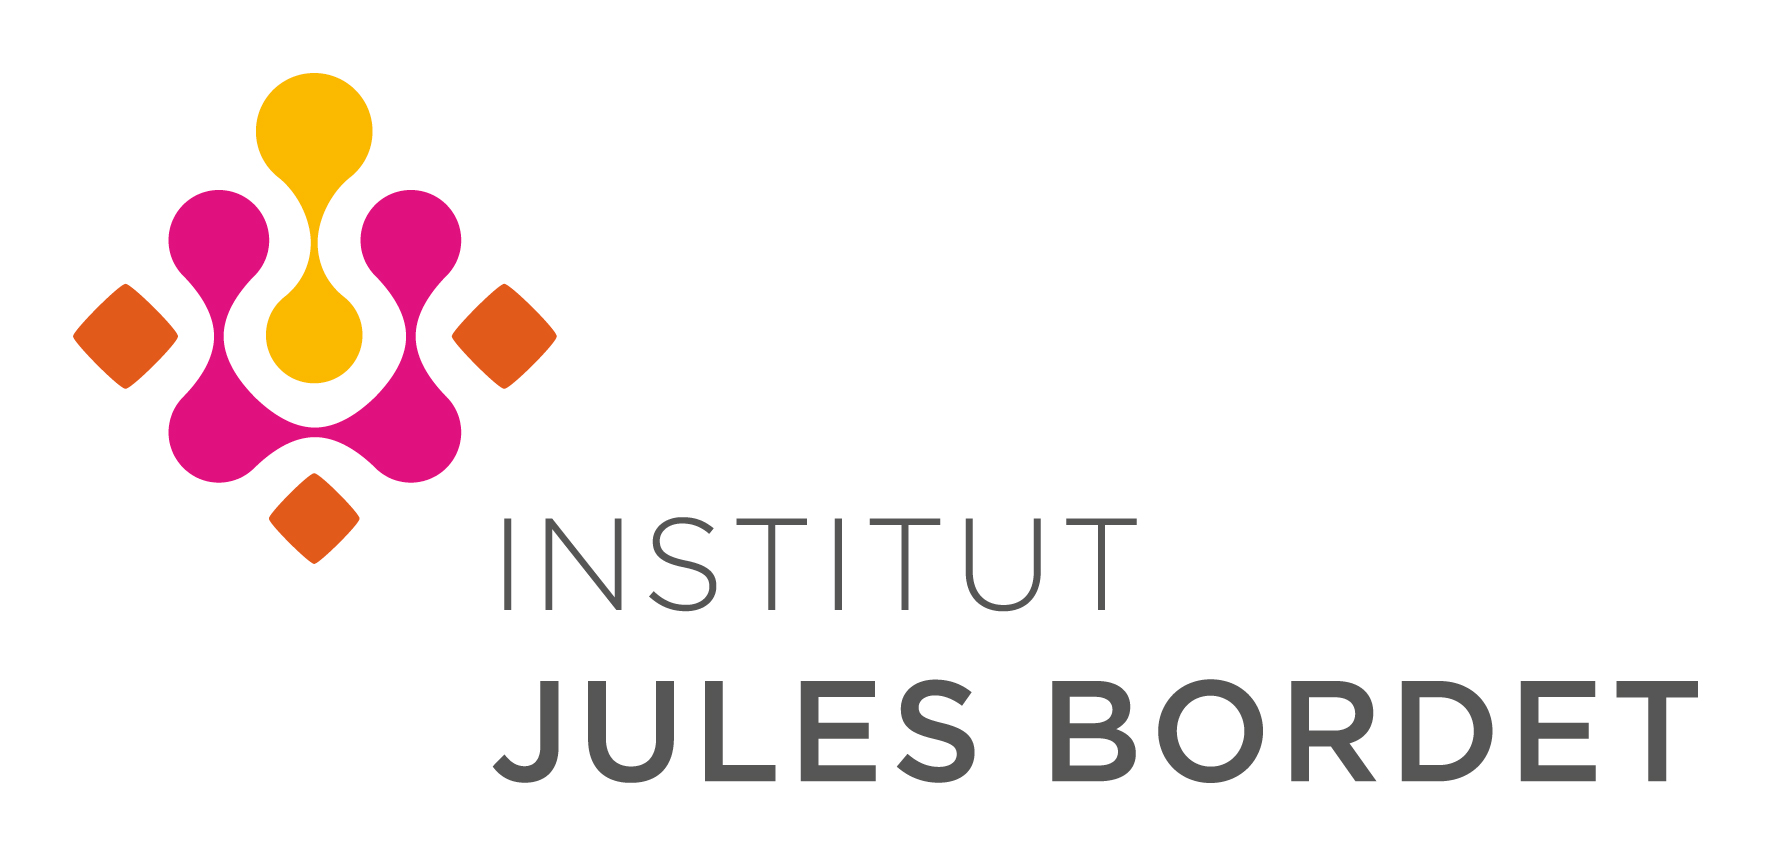 Jules Bordet Institute - Faculty of Medicine